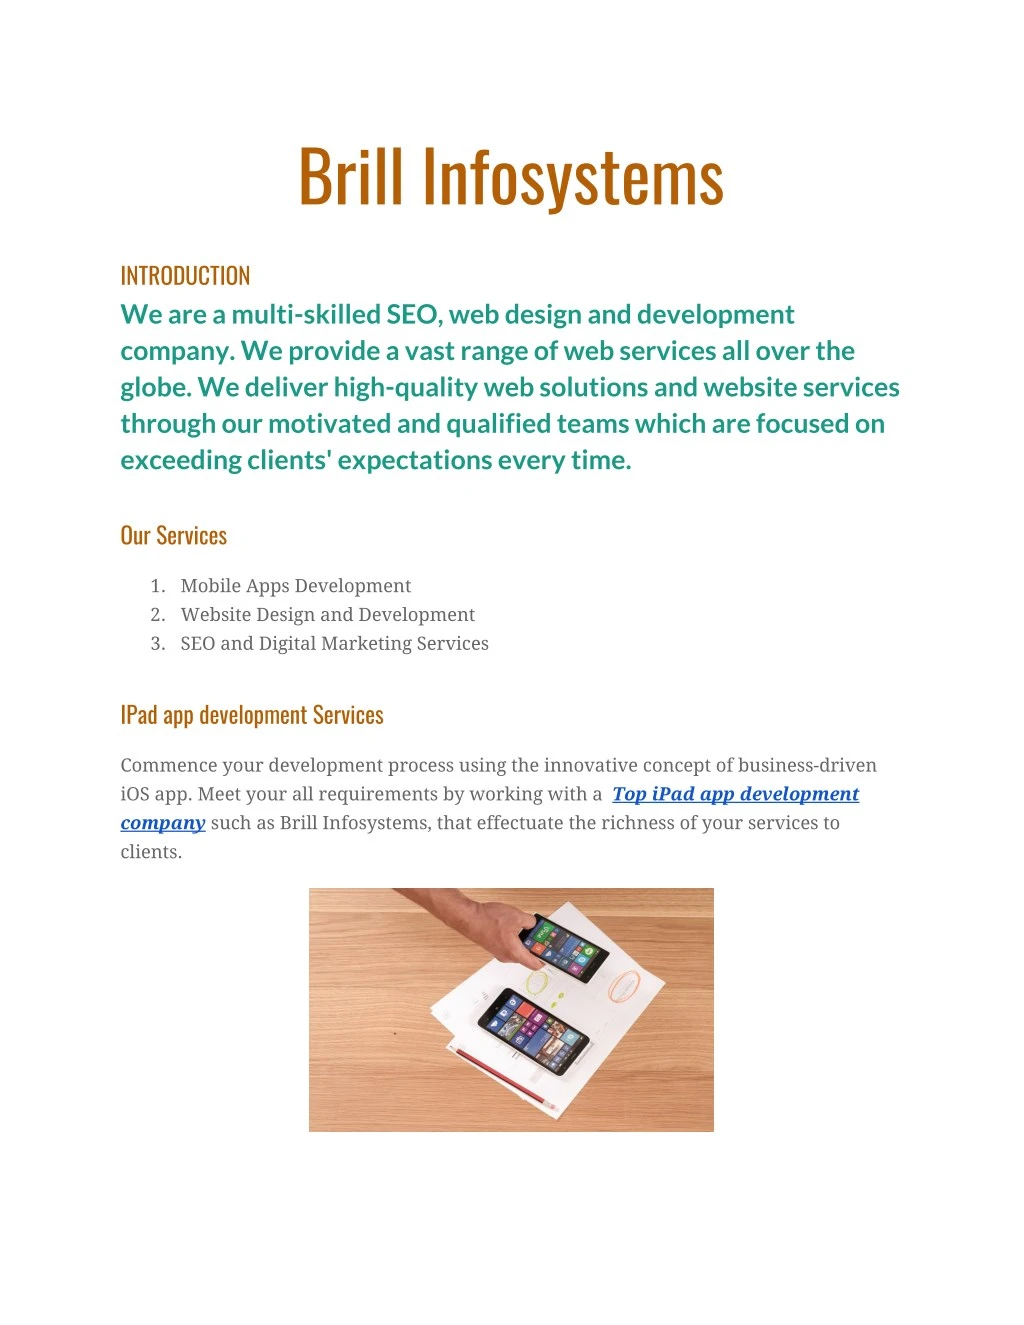 brill infosystems